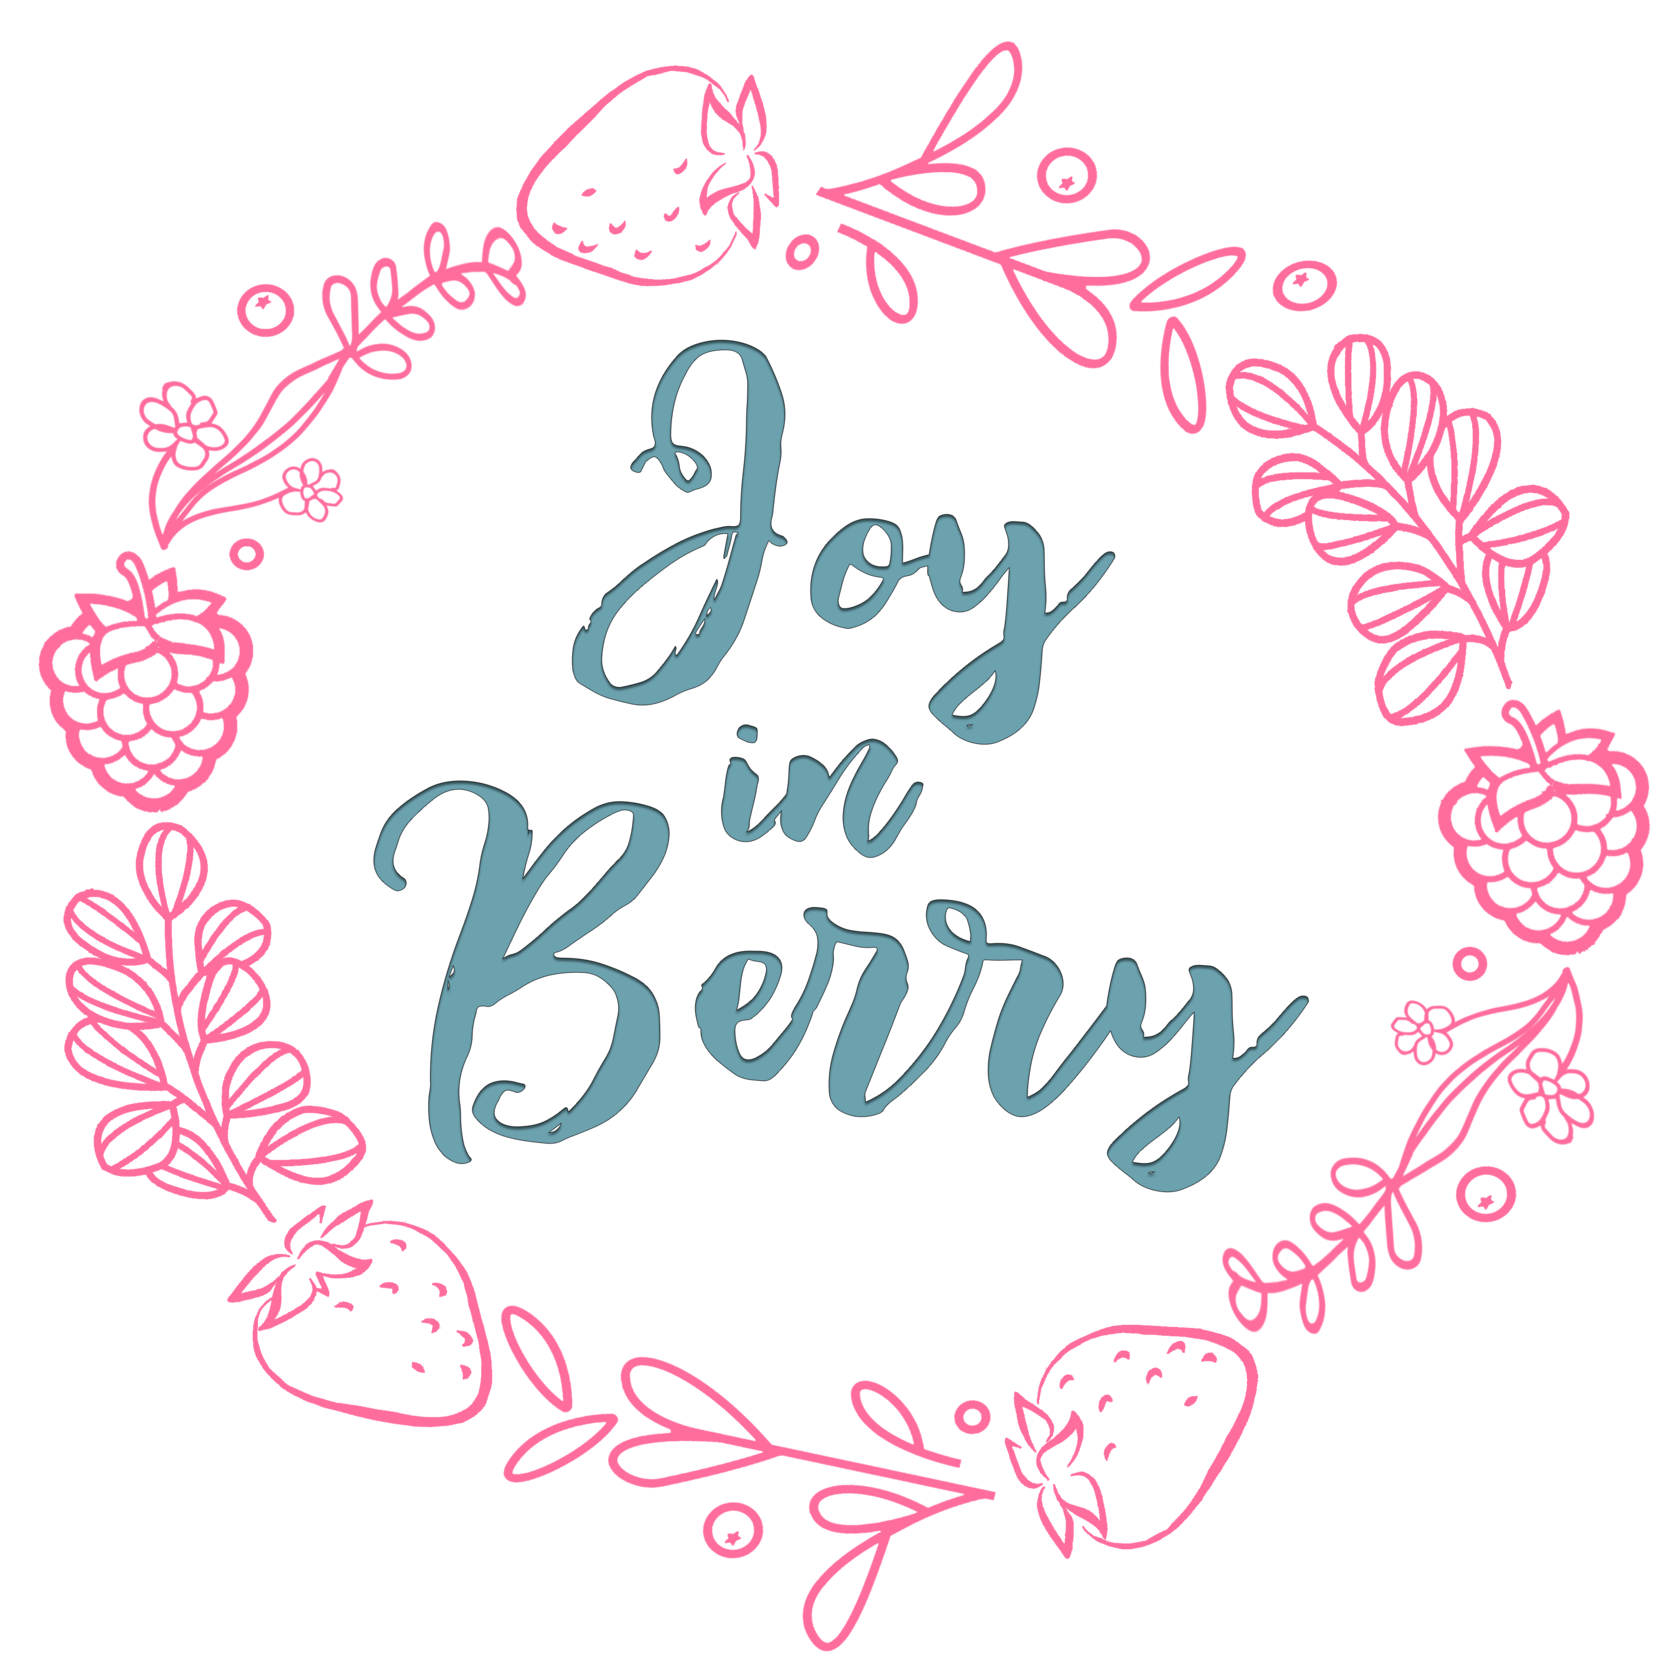 Joy in Berry